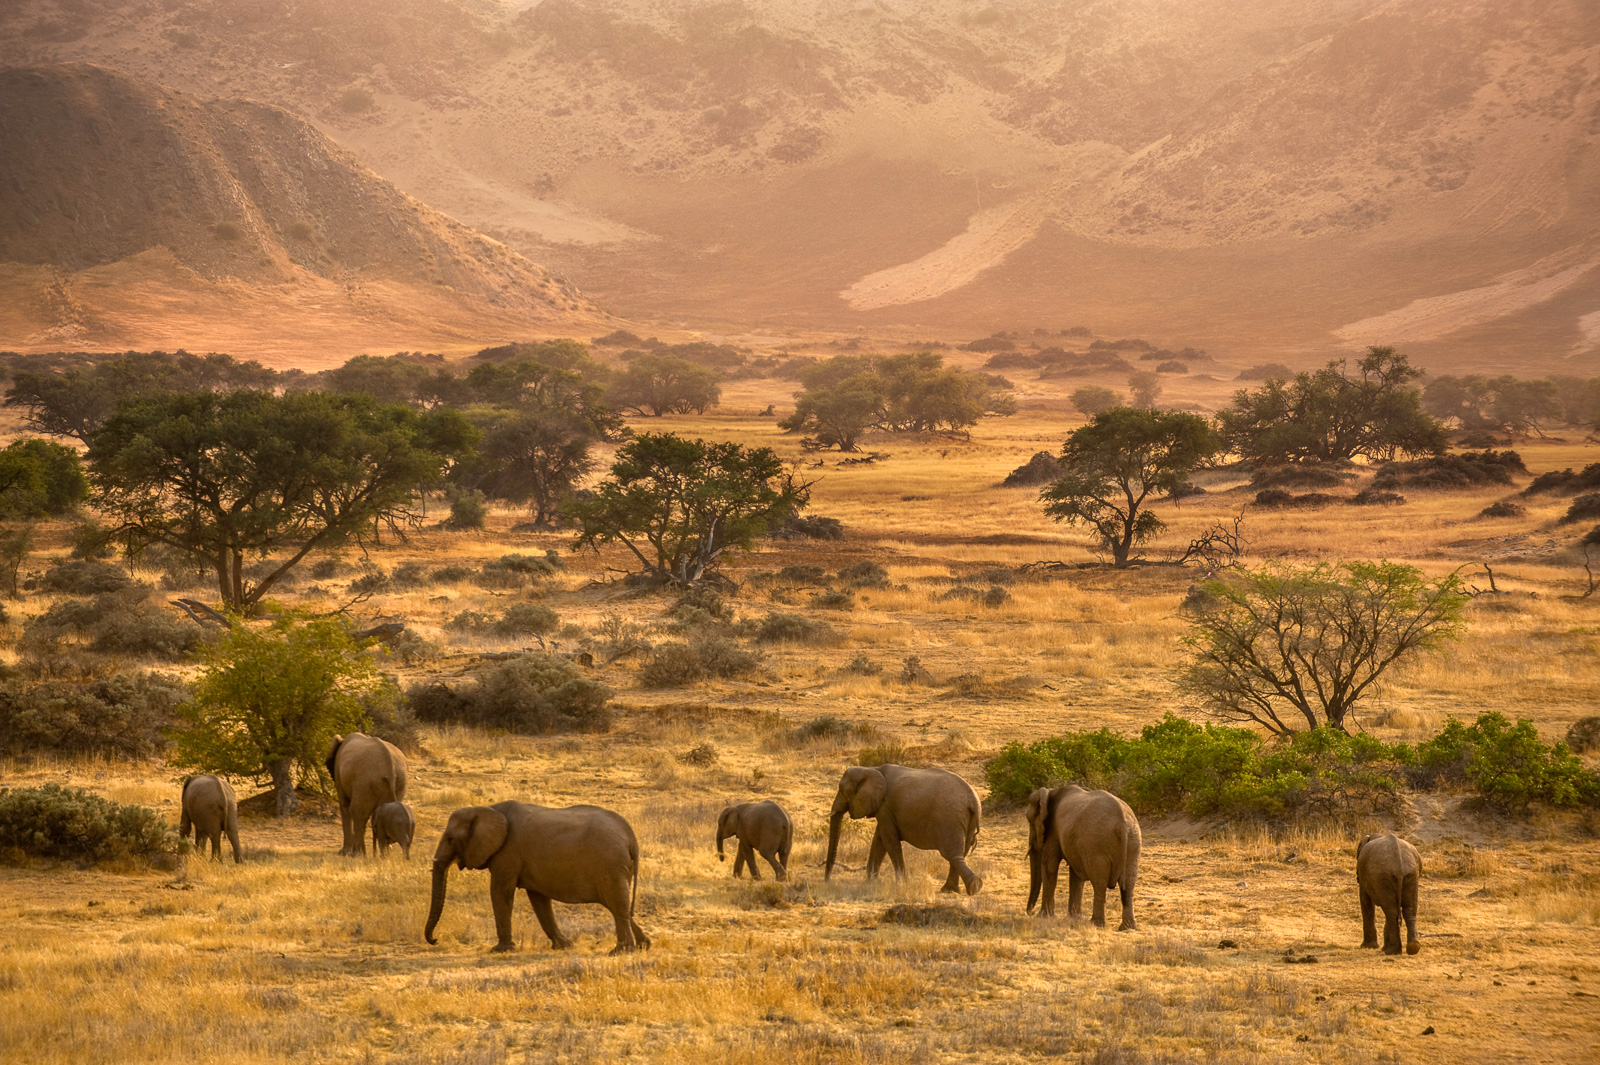 Desert elephants, Huab River, Torra Conservancy, Damaraland, Namibia